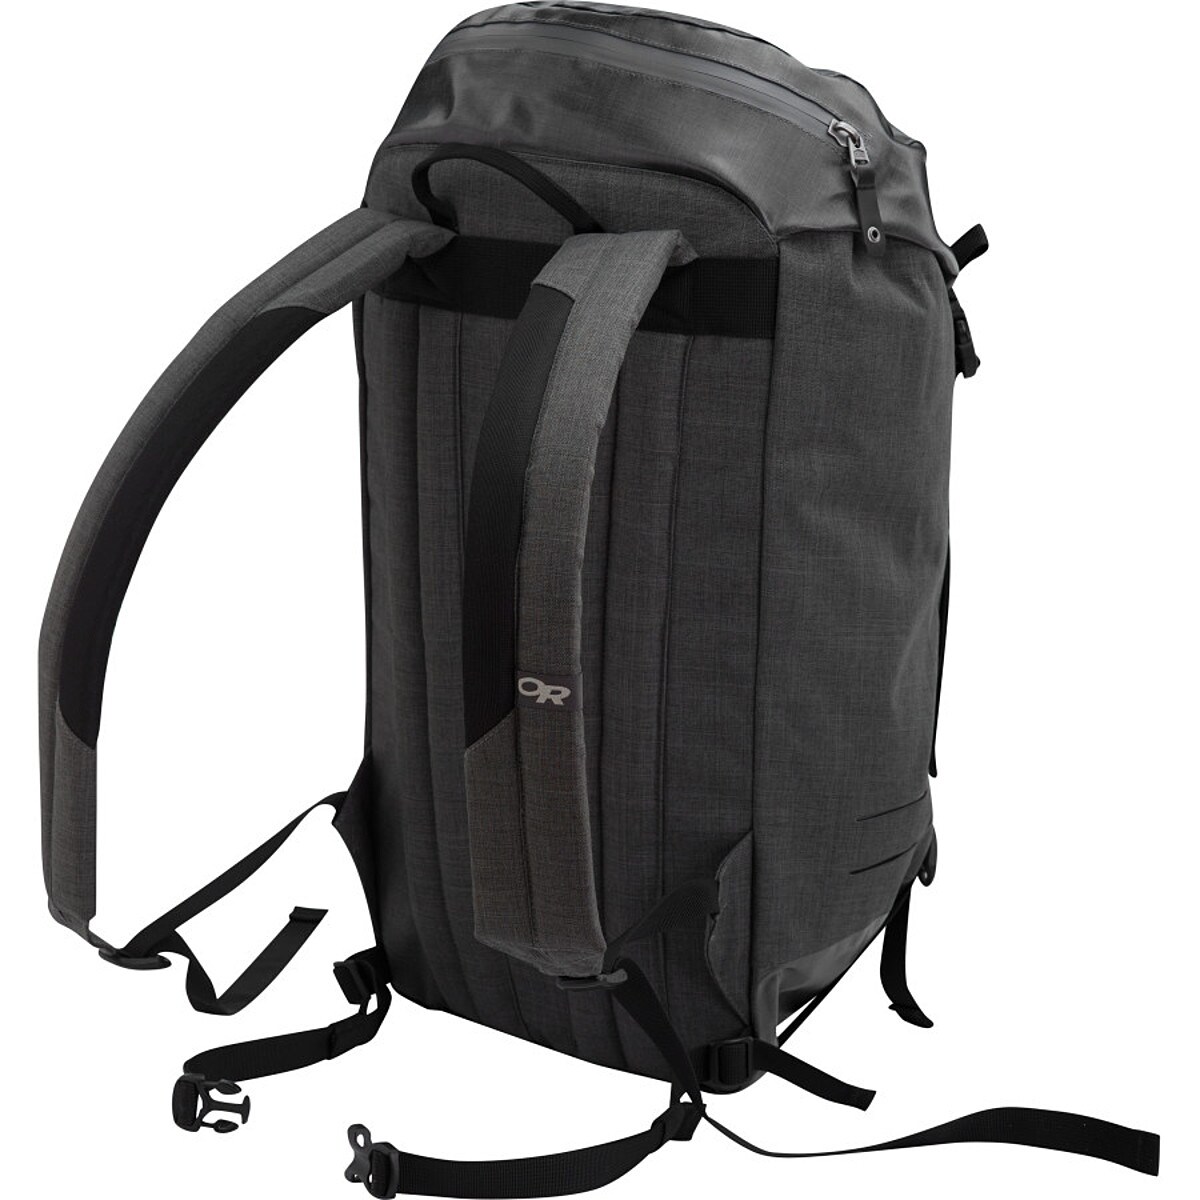 Outdoor Research Rangefinder Backpack - 1465cu in - Hike & Camp